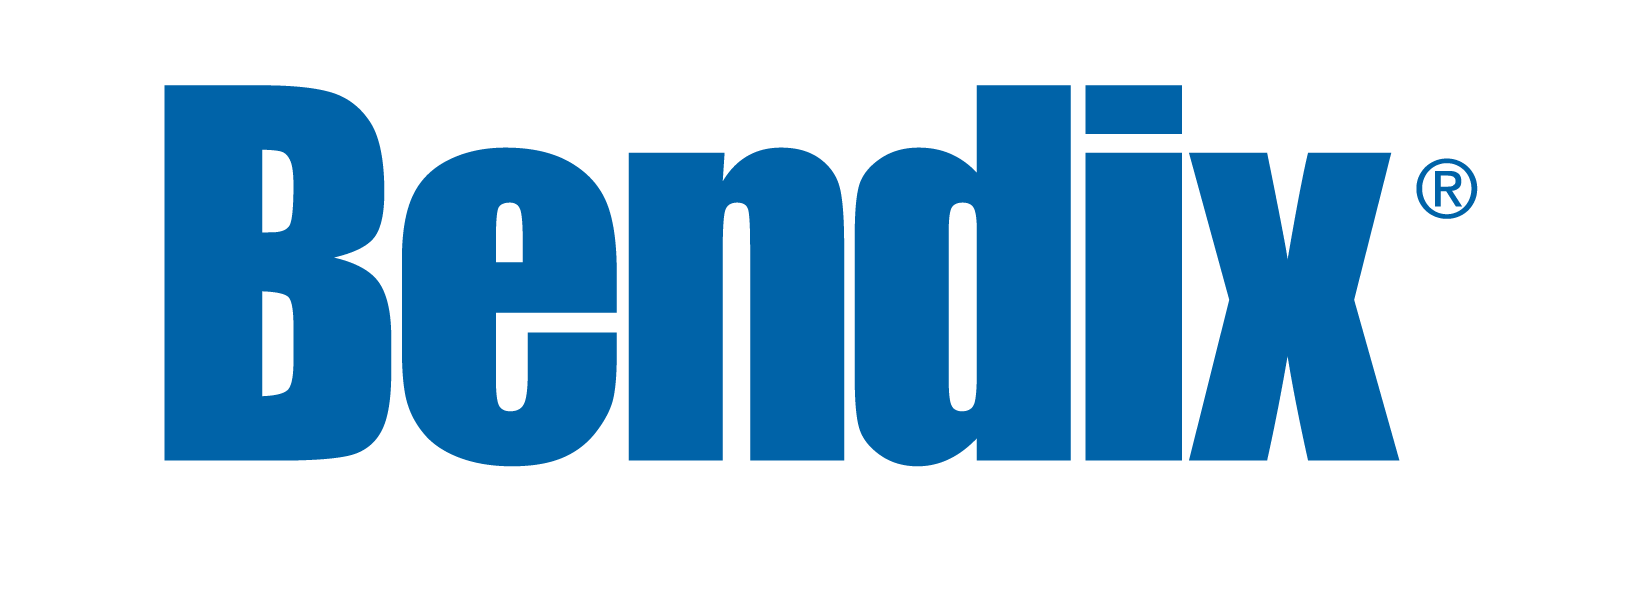 Bendix Logo - Bendix logo png PNG Image